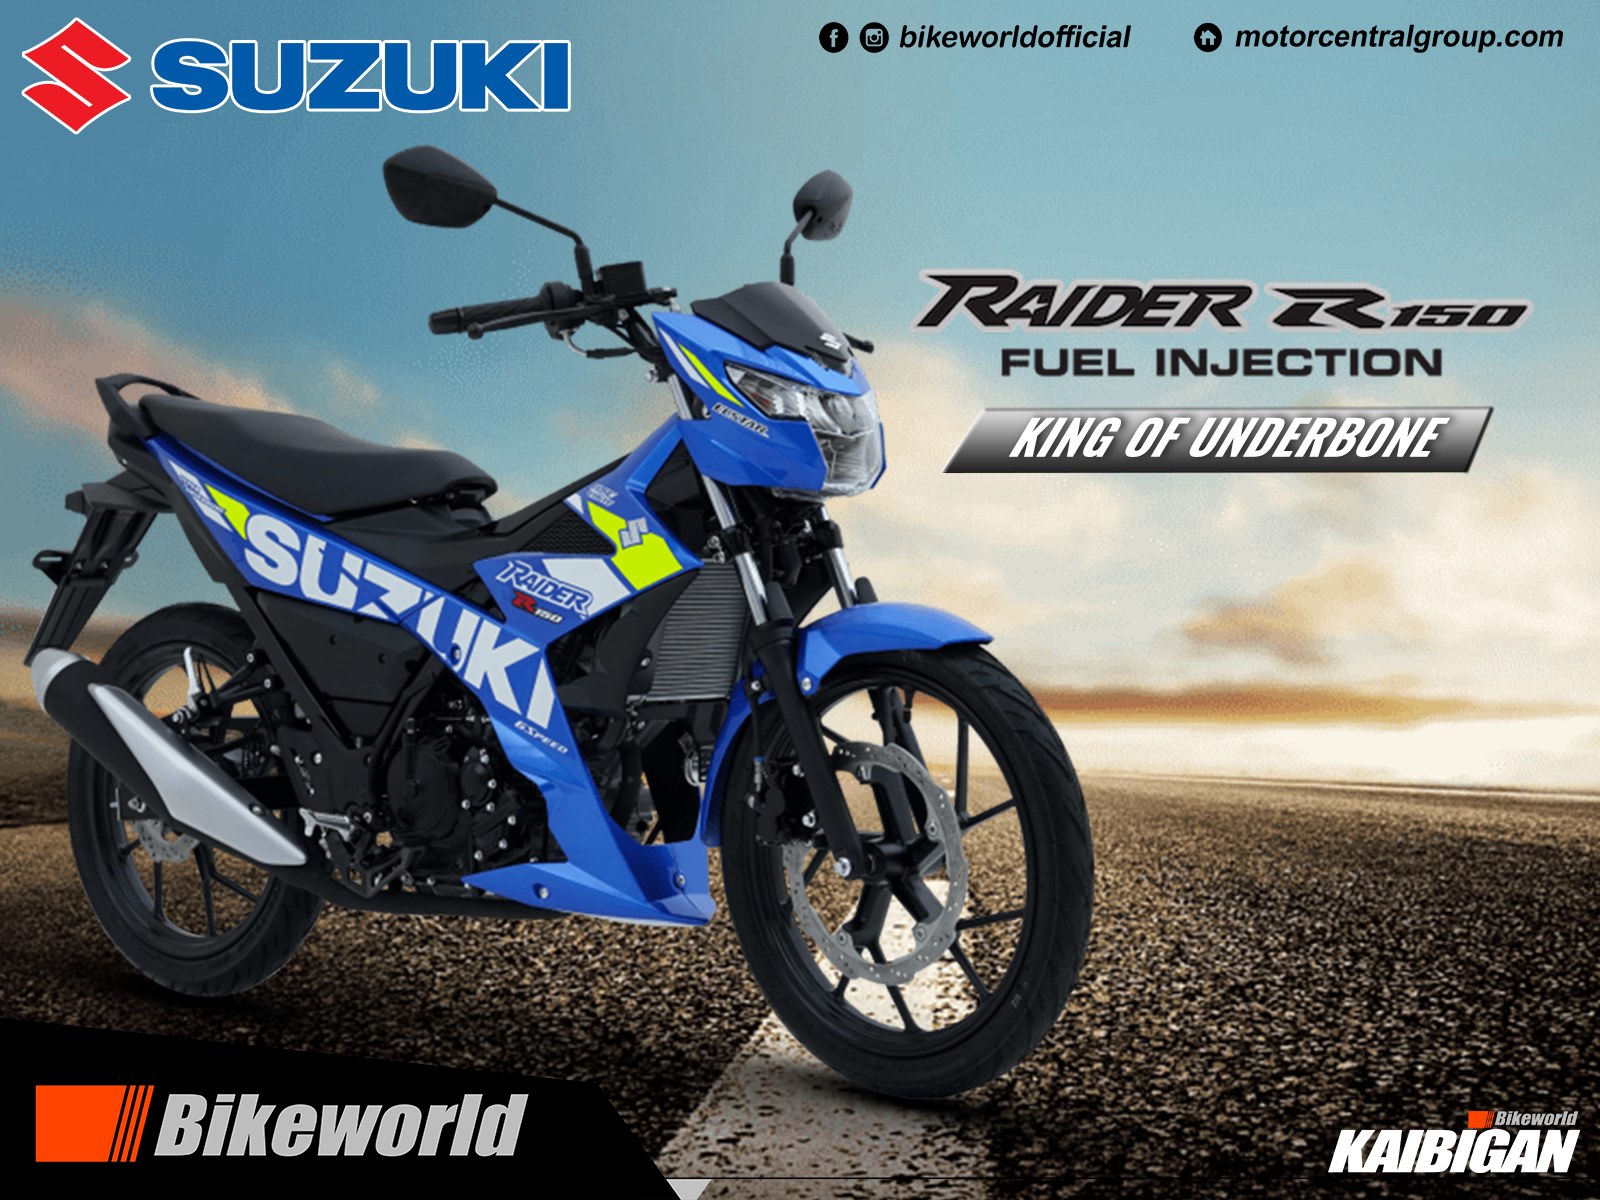 All-New Suzuki Raider R150 FI